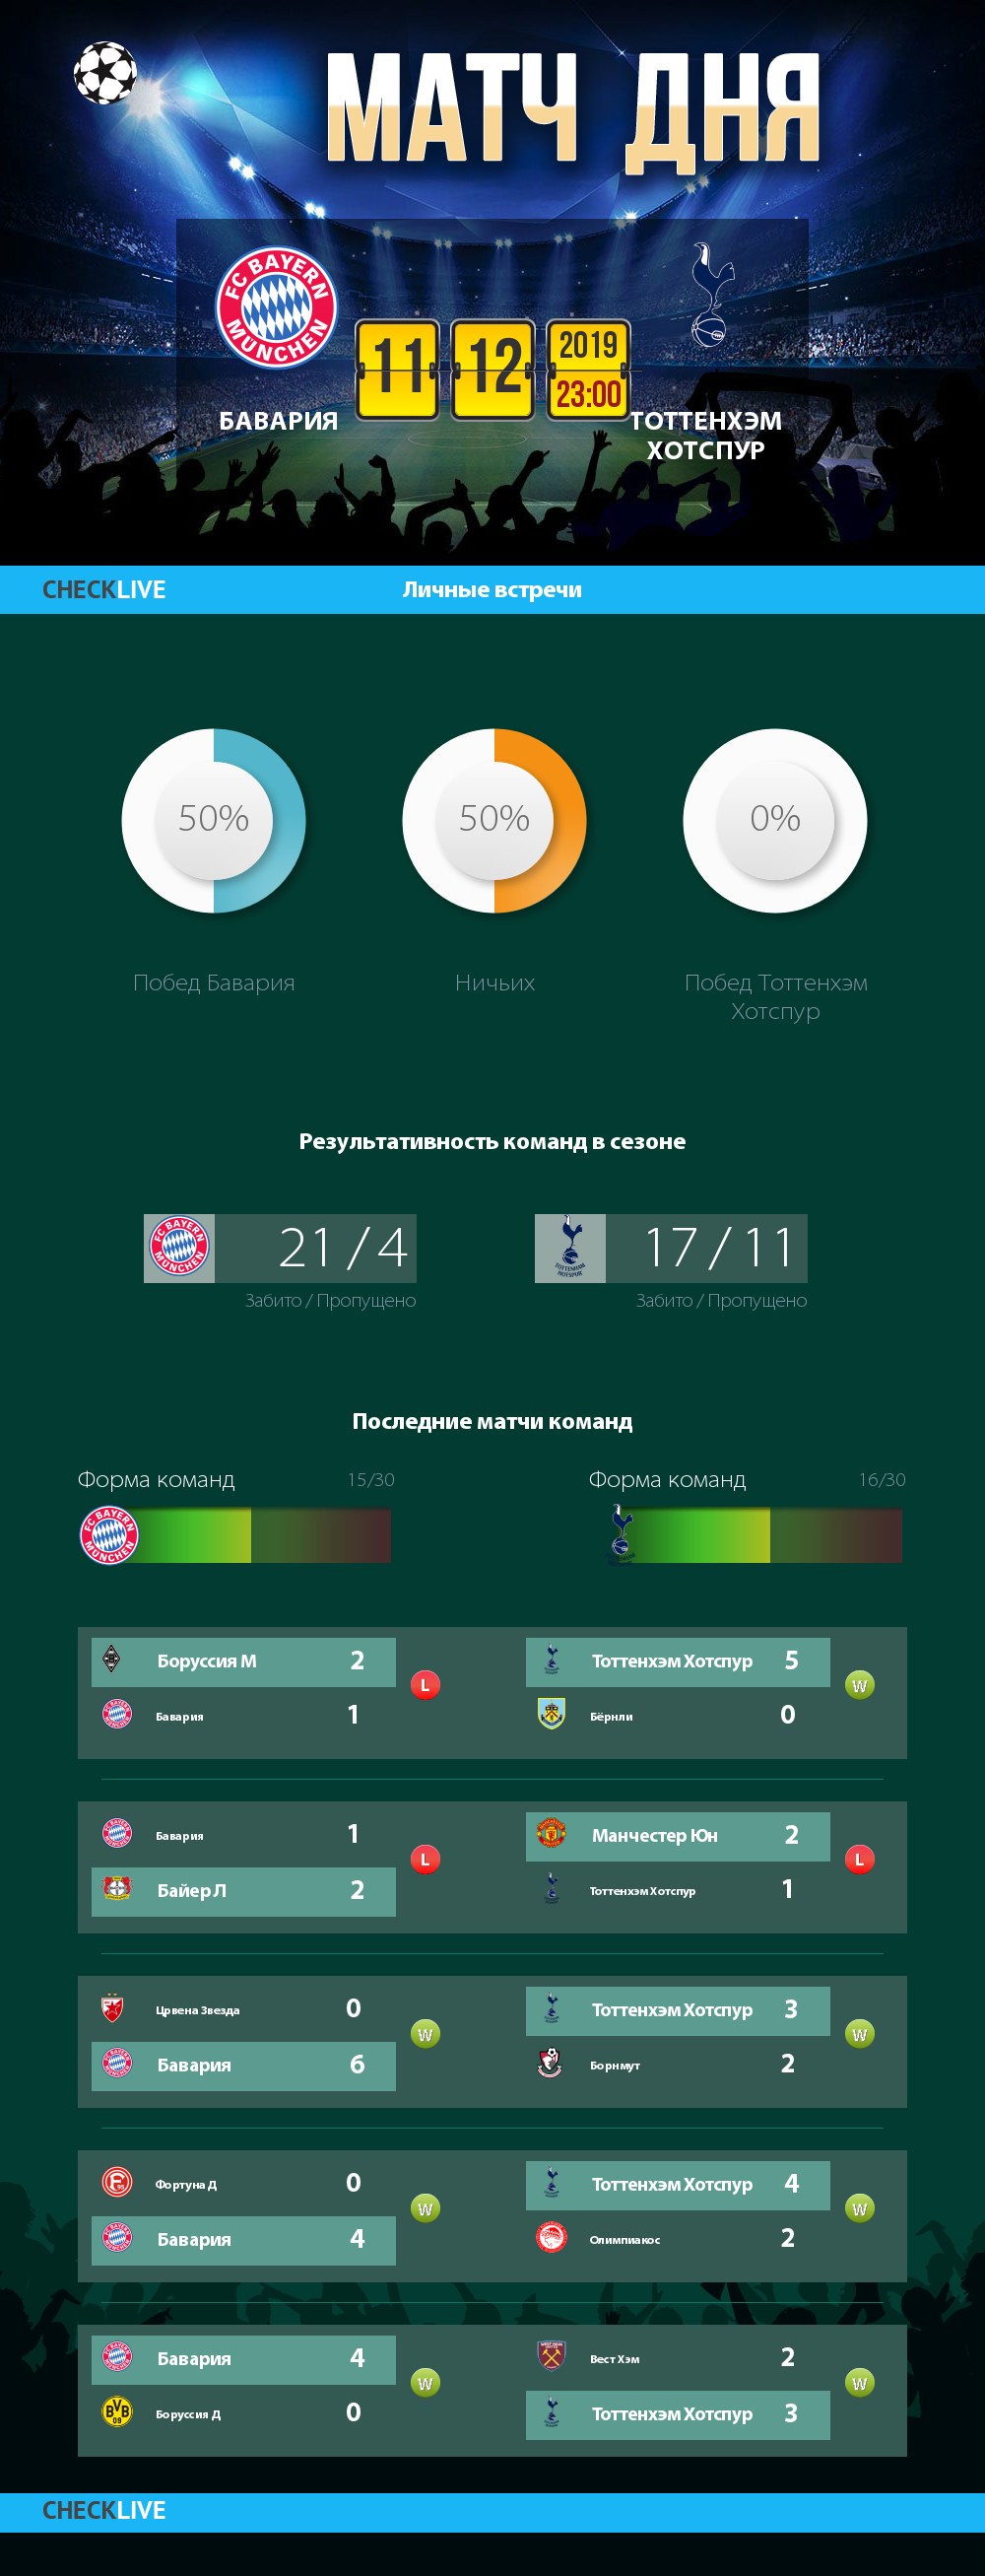 Инфографика Бавария и Тоттенхэм Хотспур матч дня 11.12.2019